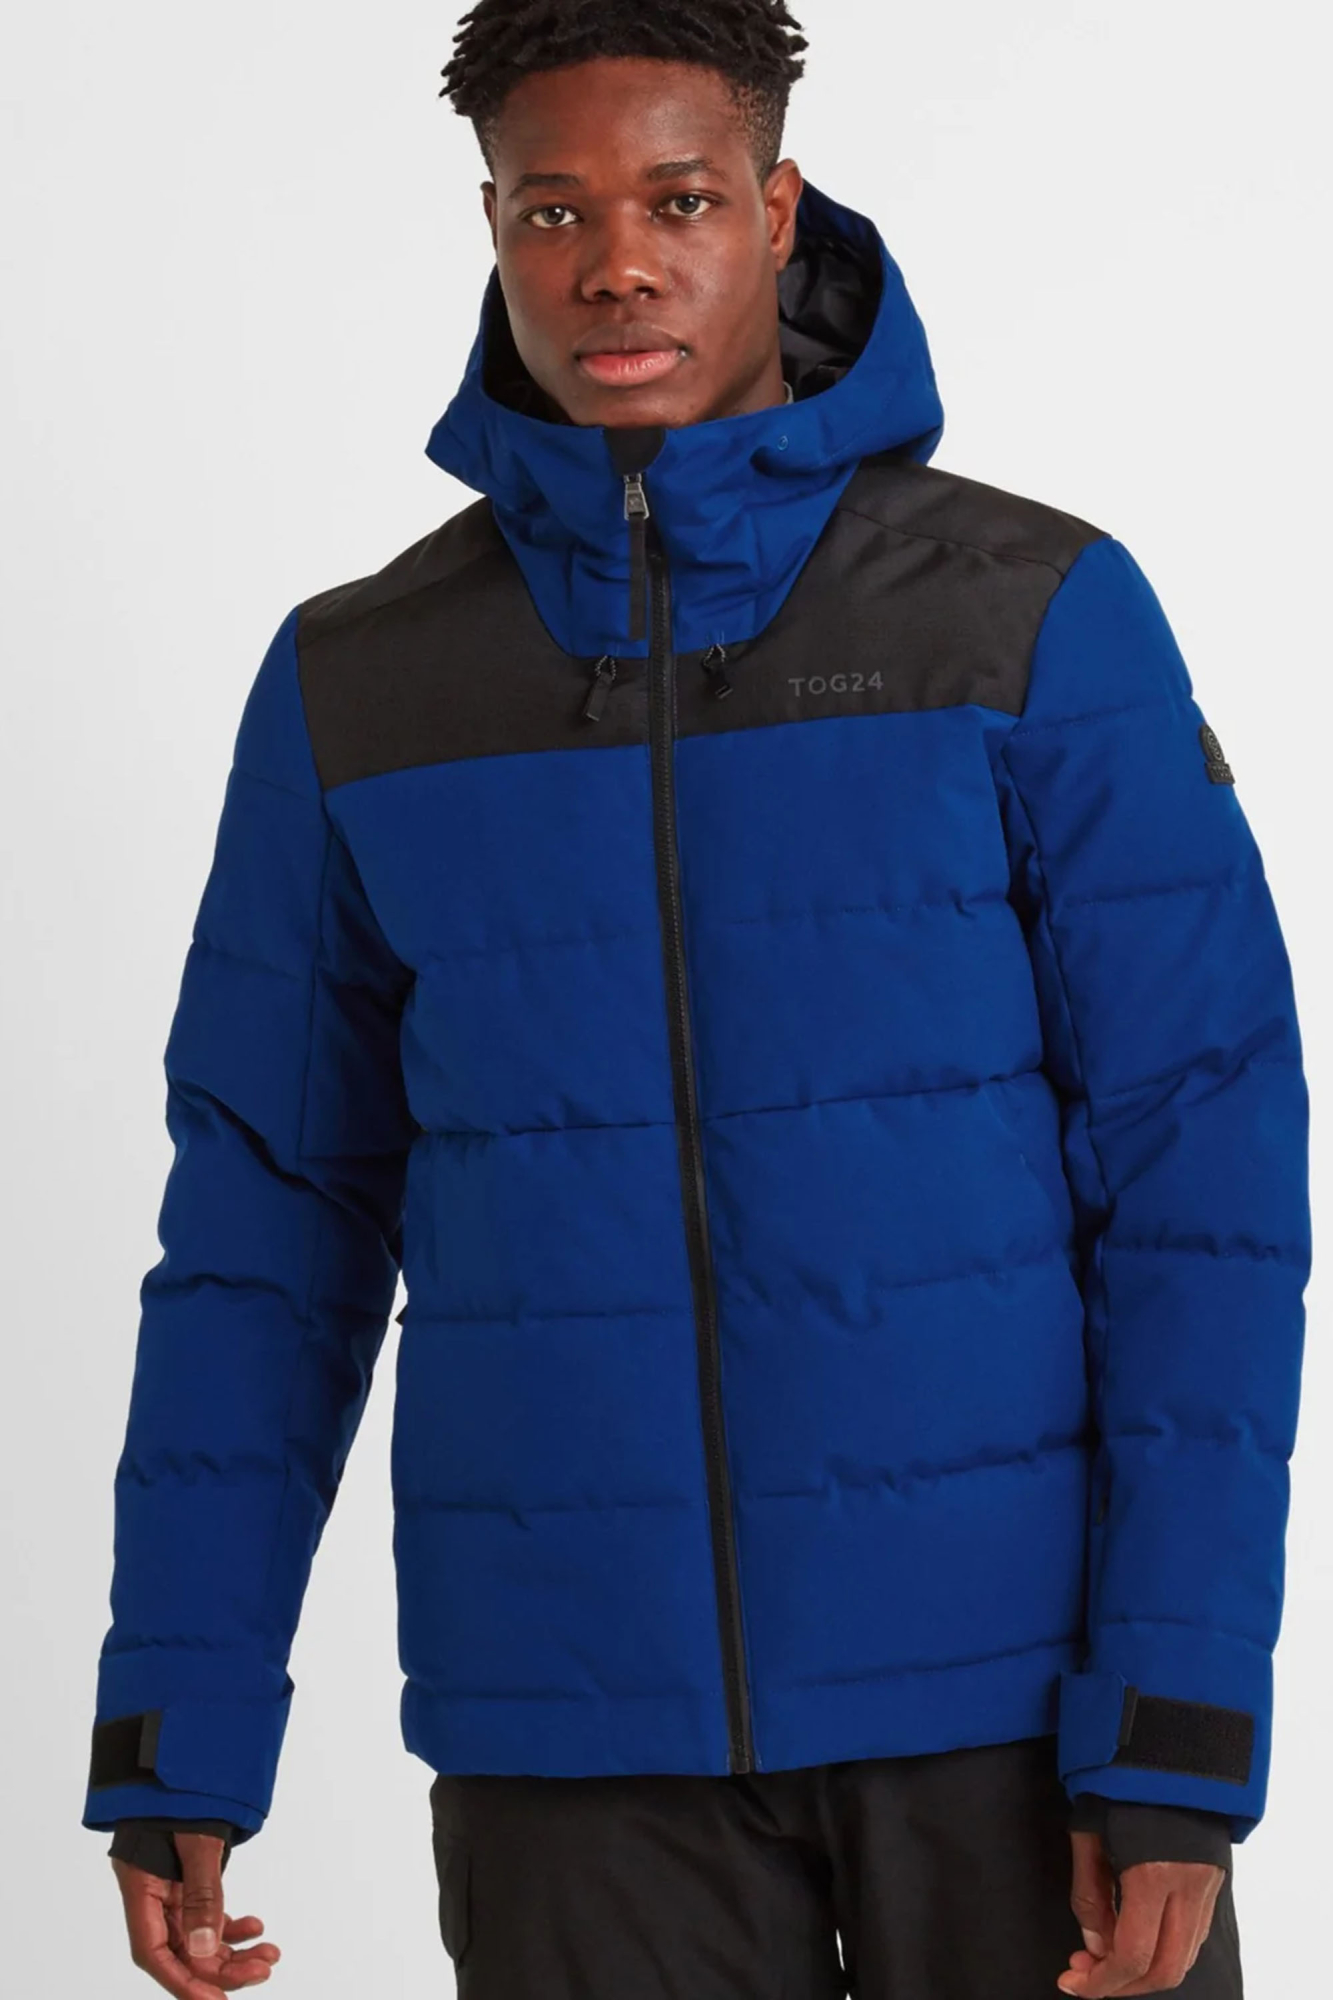 Berg Ski Jacket - Size: Small Men’s Blue Tog24